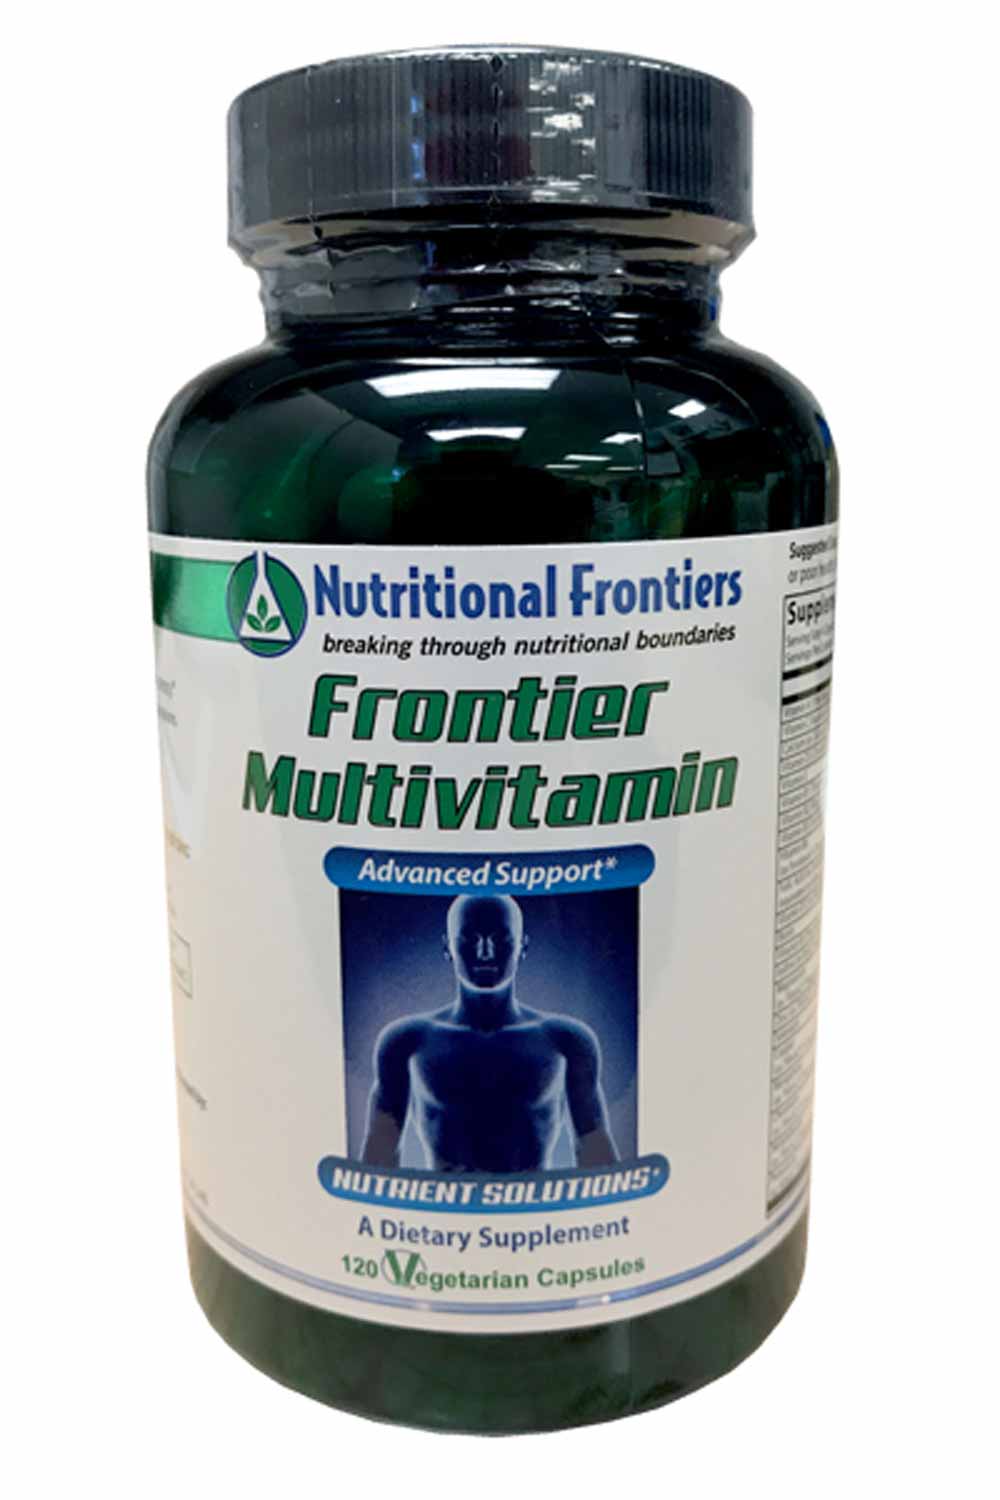 Nutritional Frontiers Frontier Multivitamin